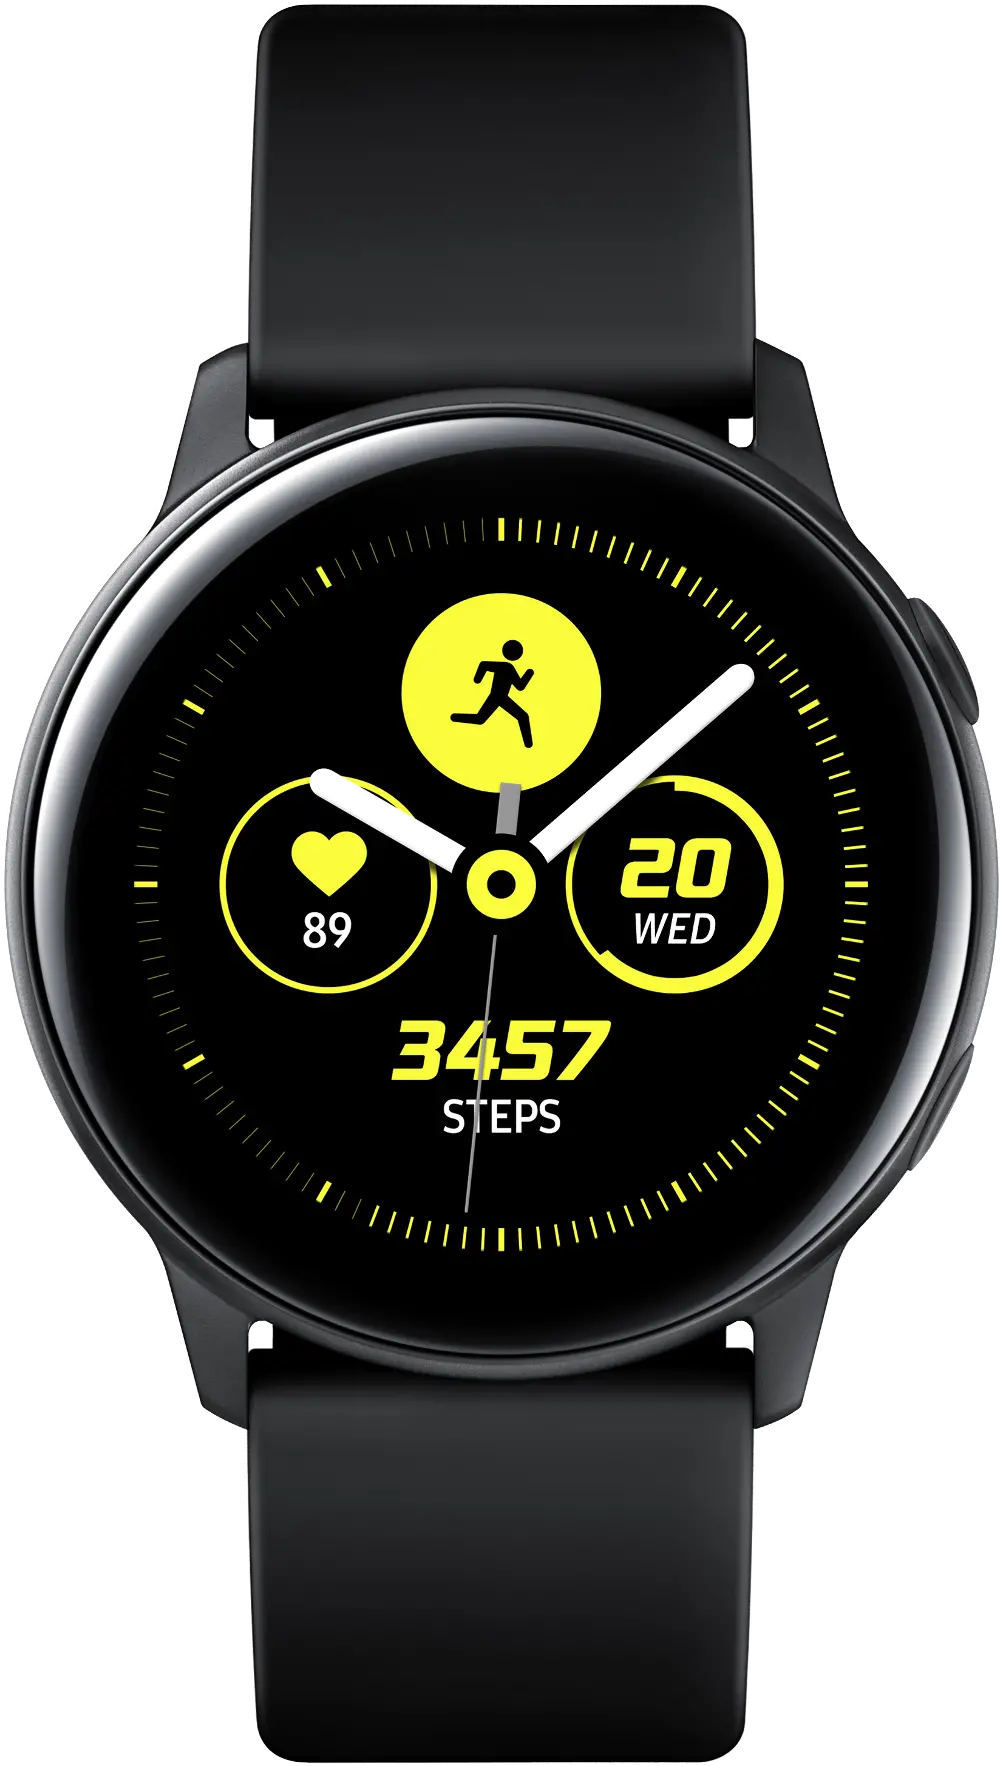 SM-R500NZKAXAR Galaxy Watch Active (40mm) Black-1